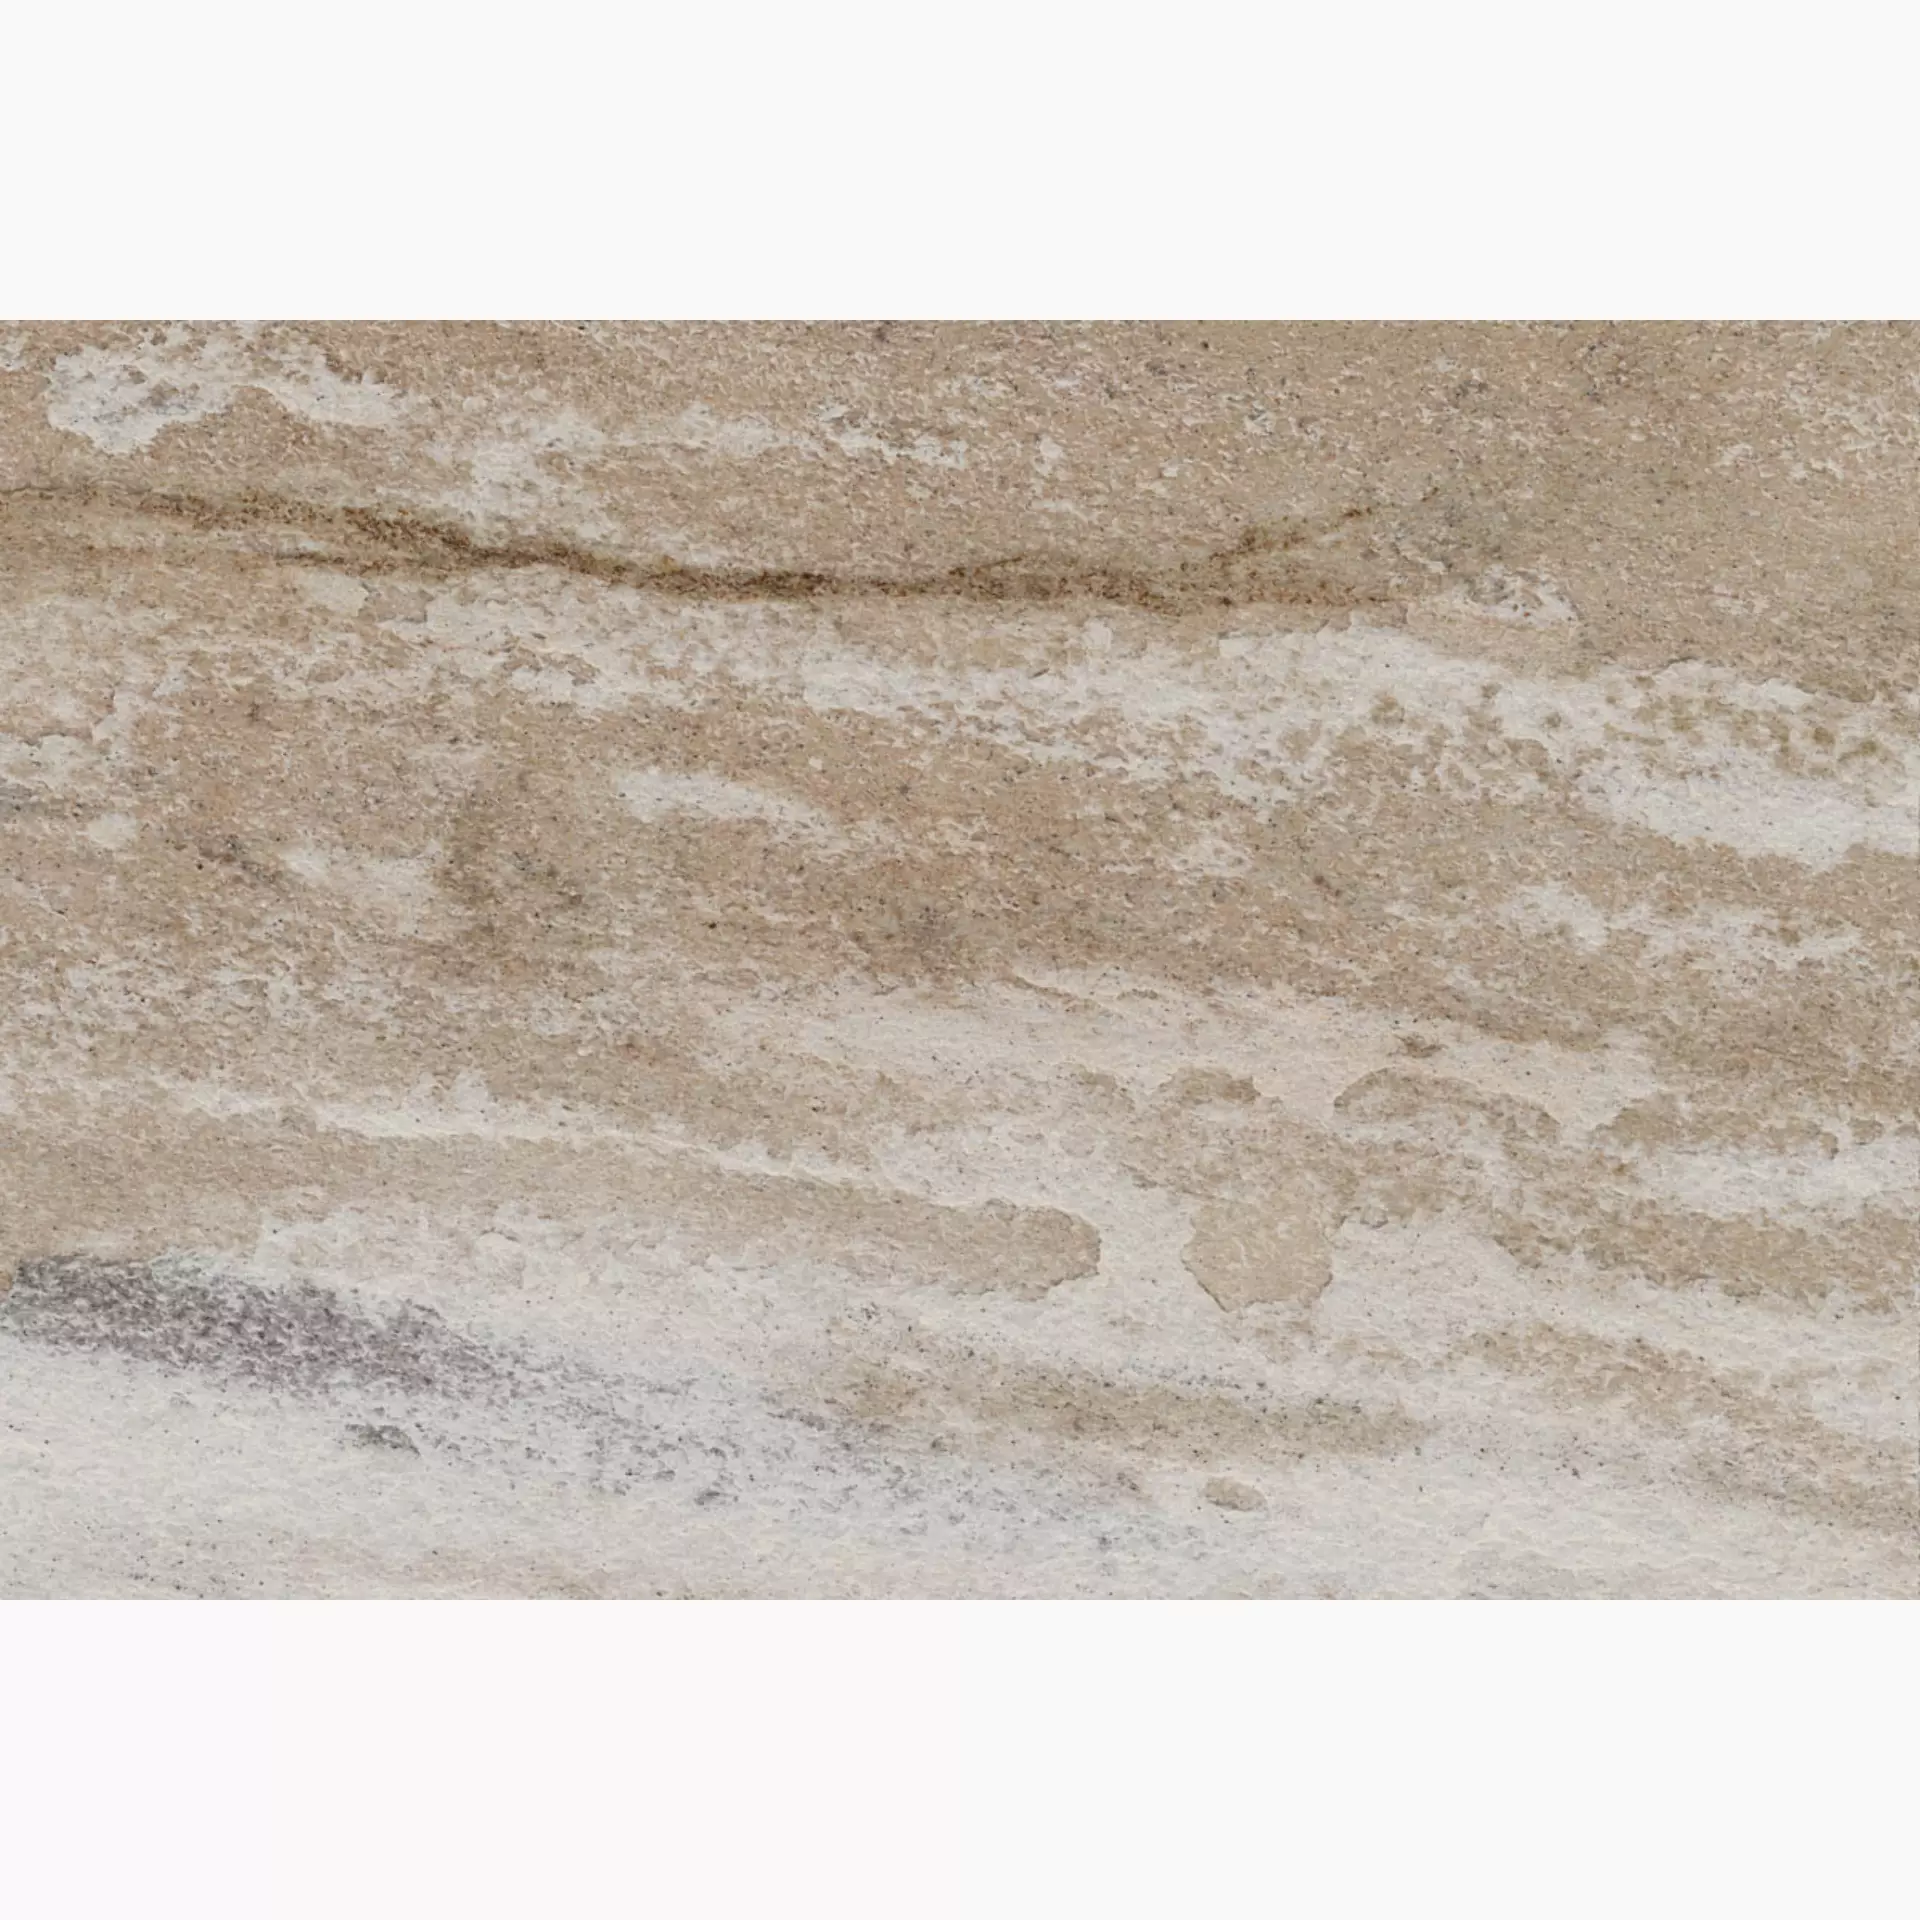 Imola Trail Quarzite Bianco Natural Strutturato Matt Outdoor 176408 20x30cm 18mm